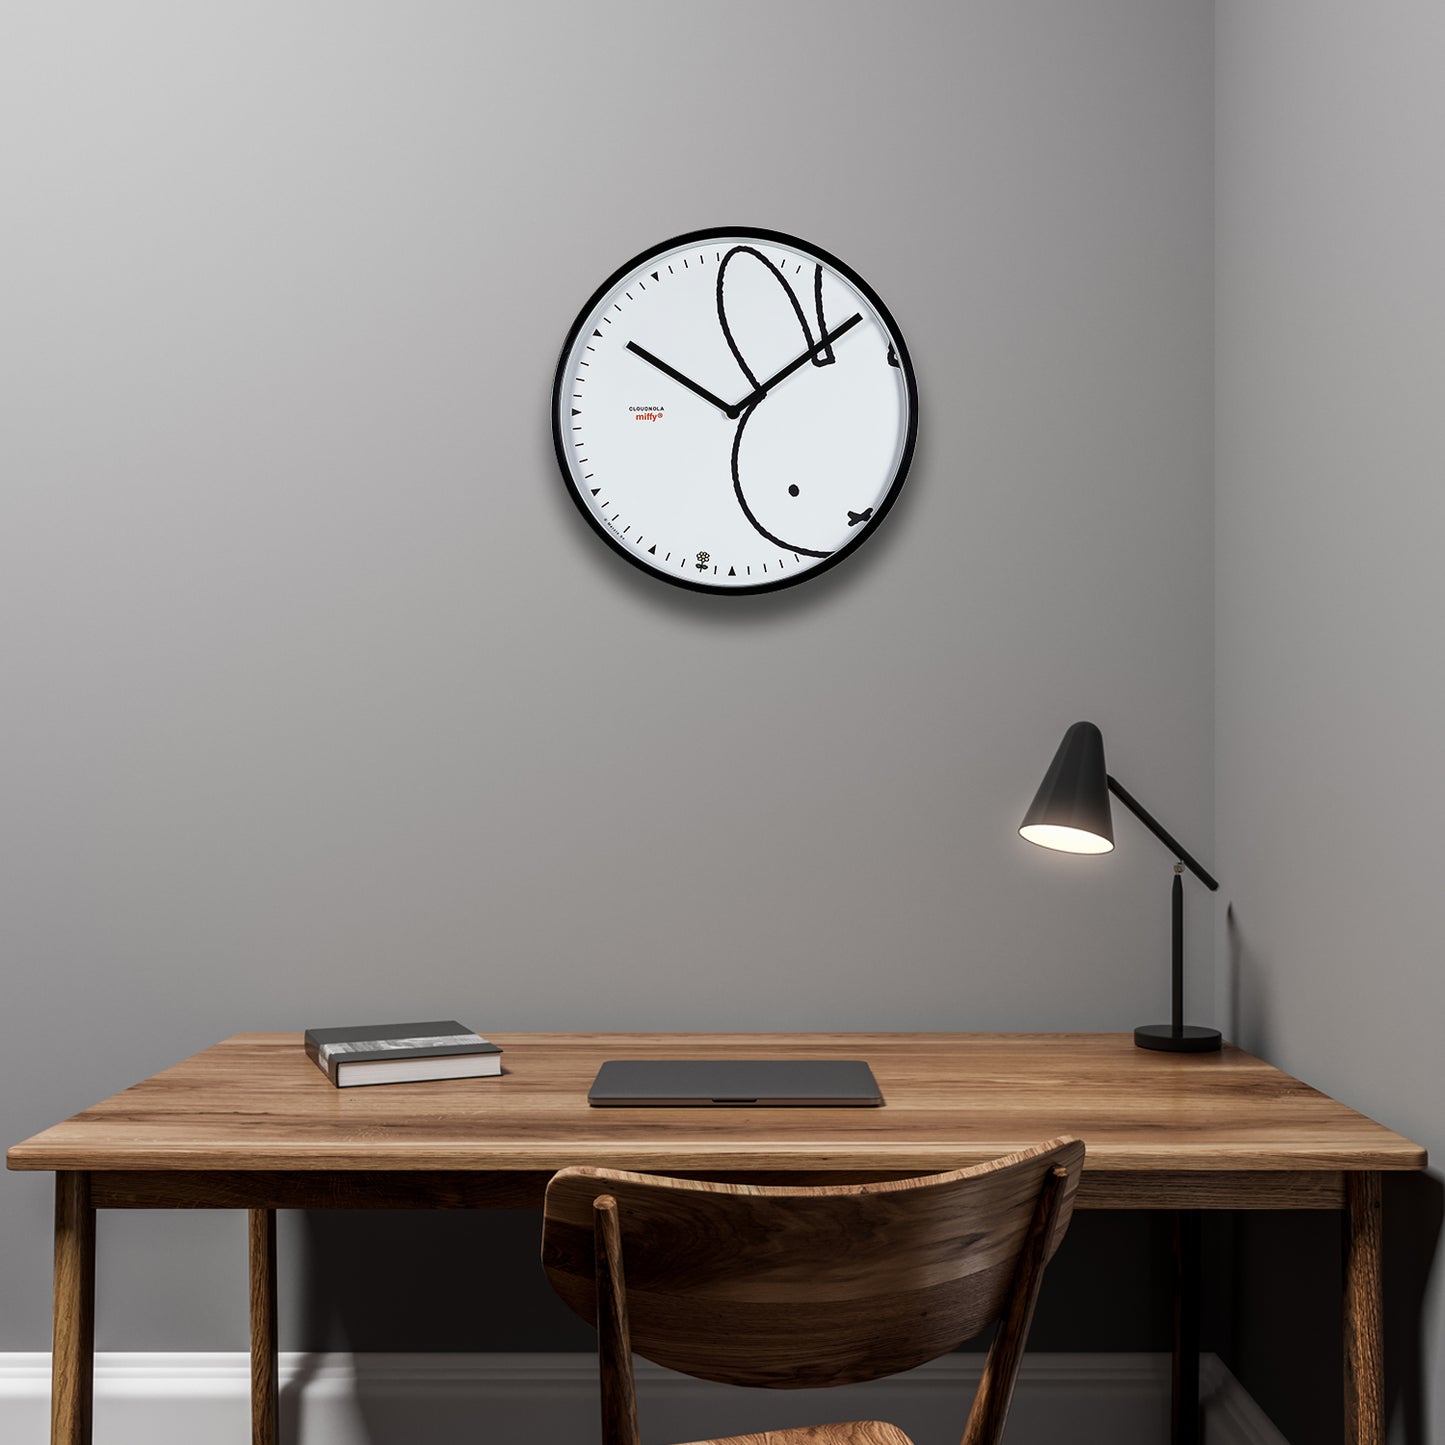 Miffy Peek a Boo XL Wall Clock - Large Silent Timepiece - Playful & Grand